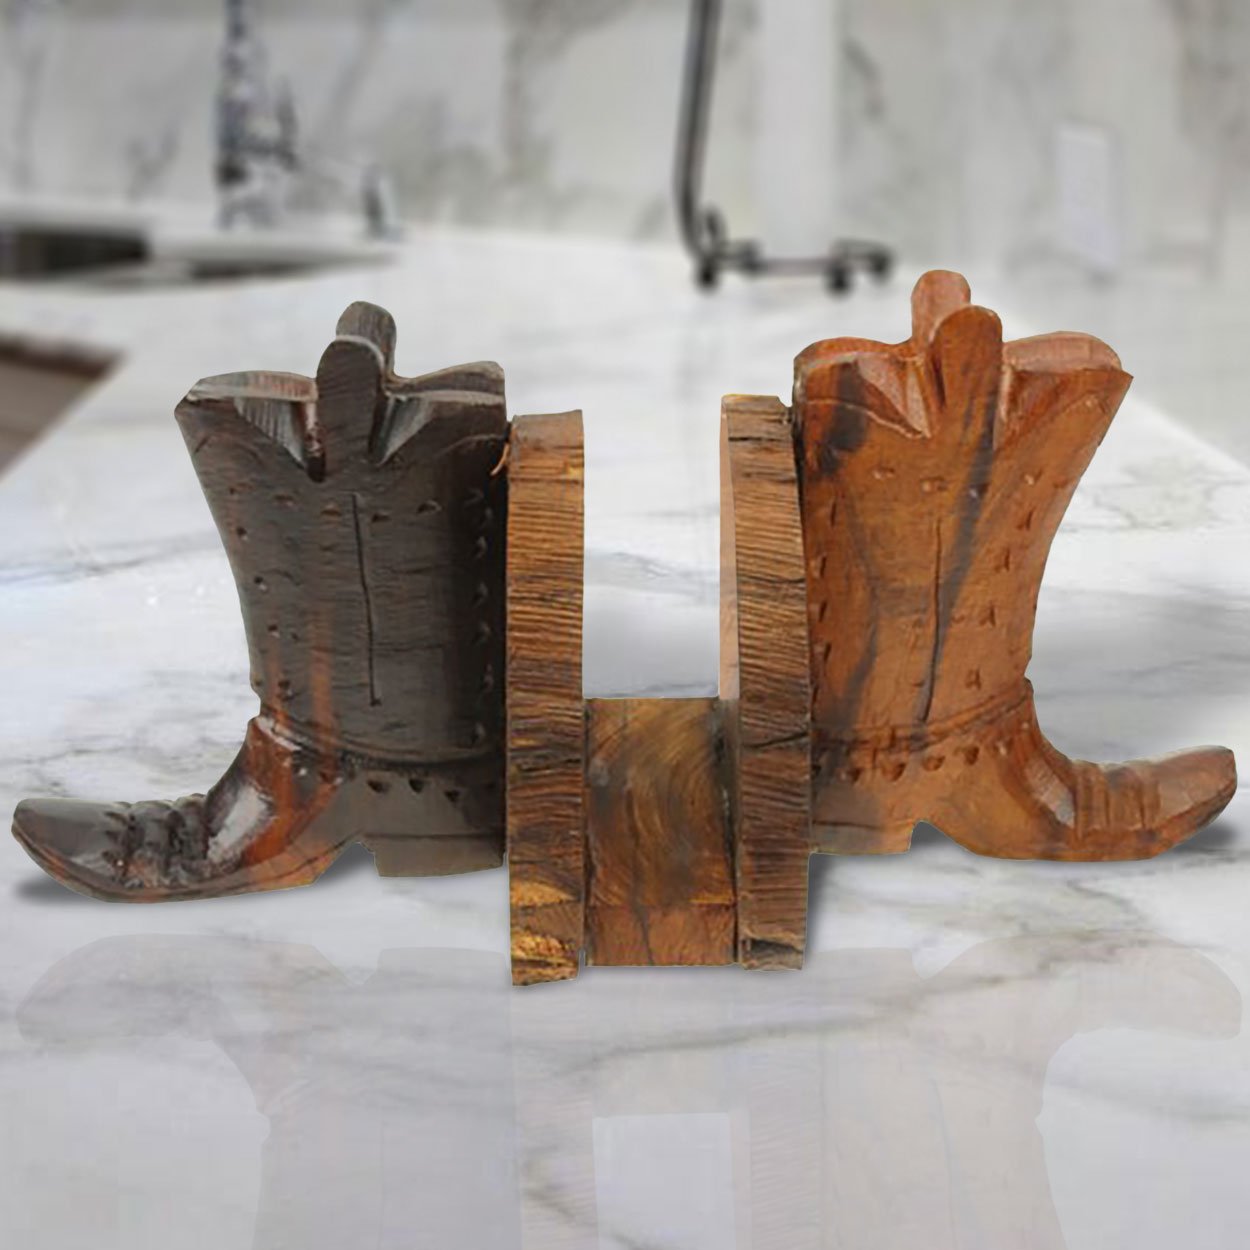 172049 - Cowboy Boots Carved Ironwood Napkin Holder